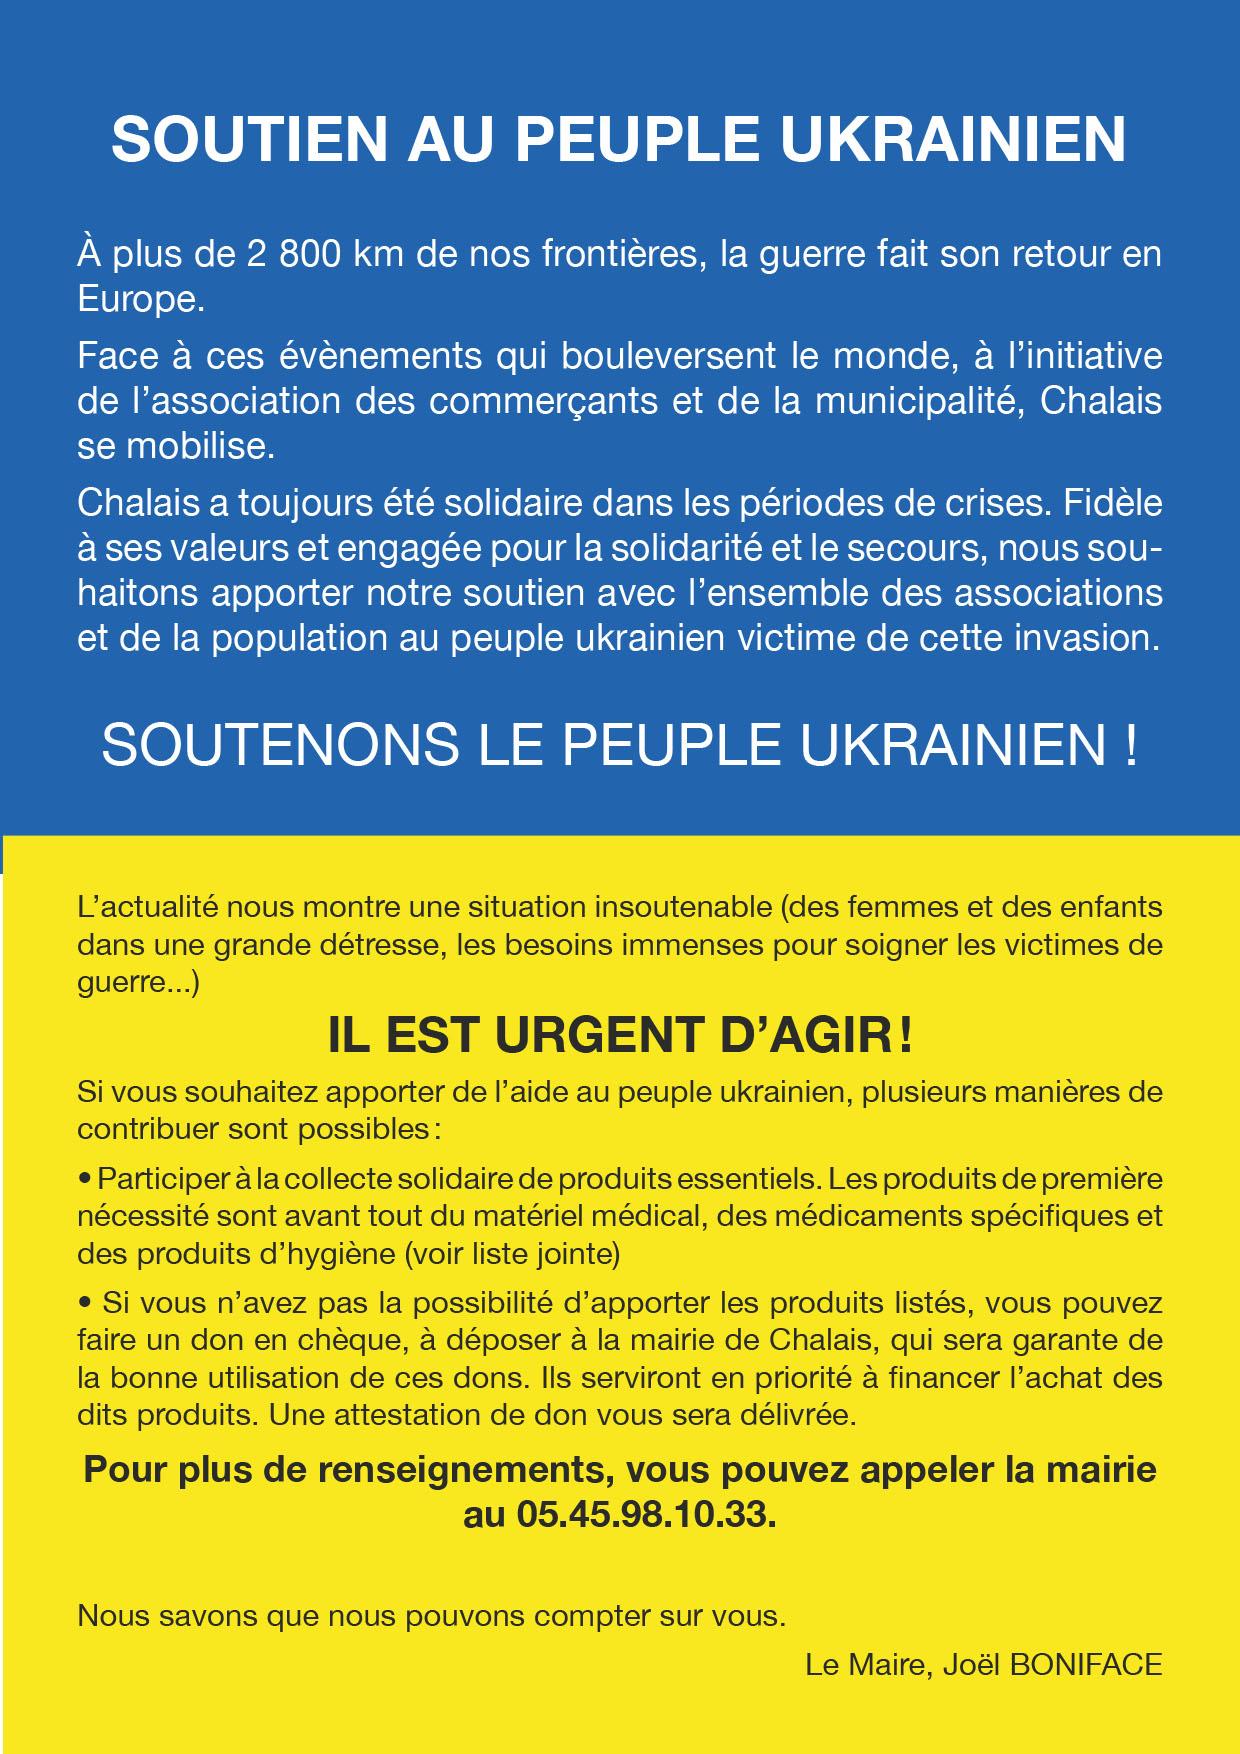 aide-ukraine1.jpg